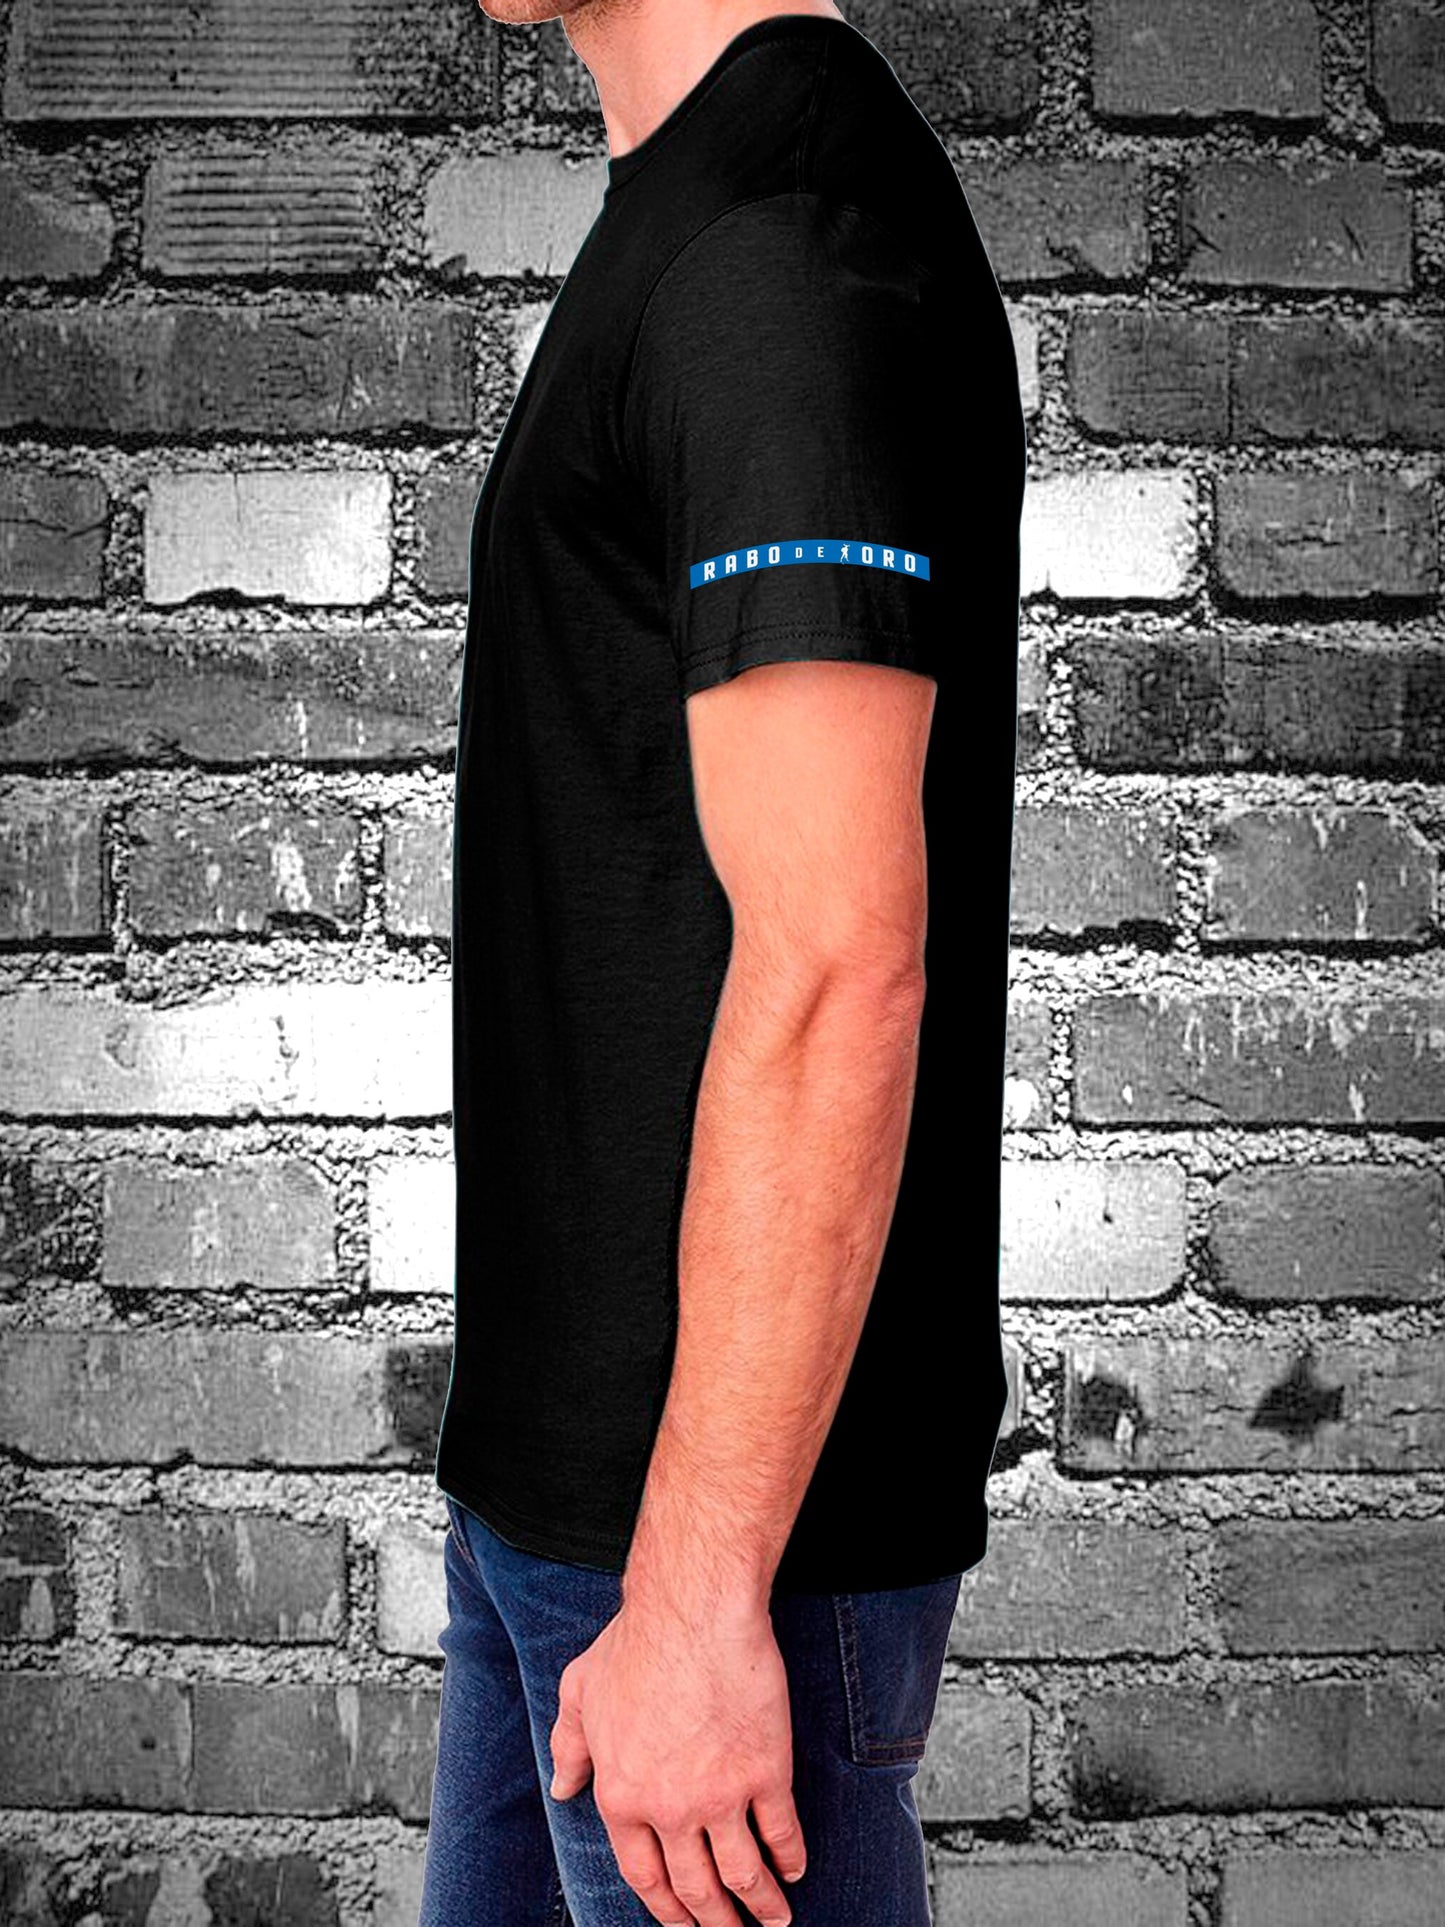 SLUT Black T-Shirt with BDSM Hanky Code details